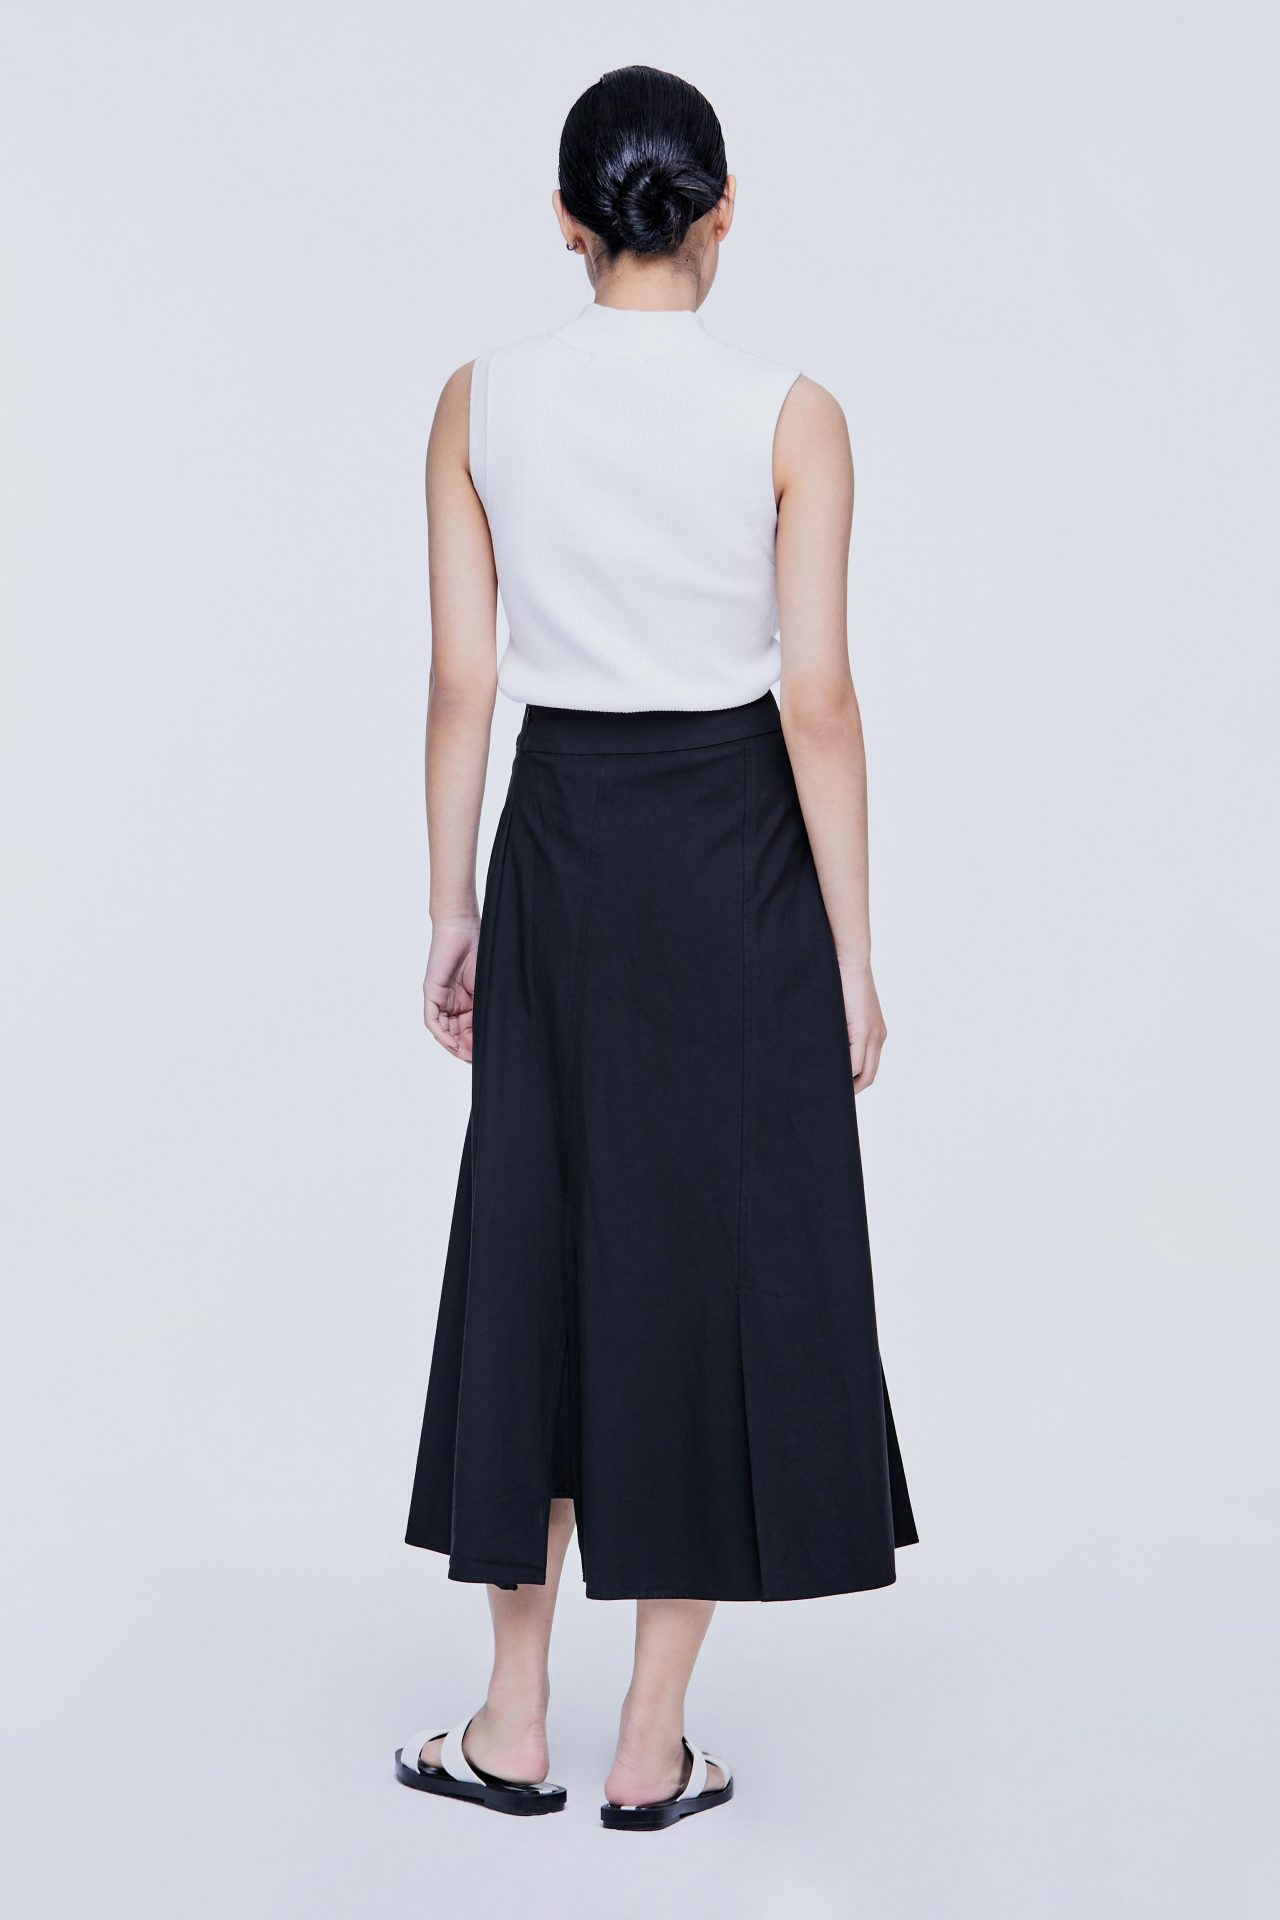 Asymmetrical Slit Skirt - SANS & SANS (MALAYSIA)